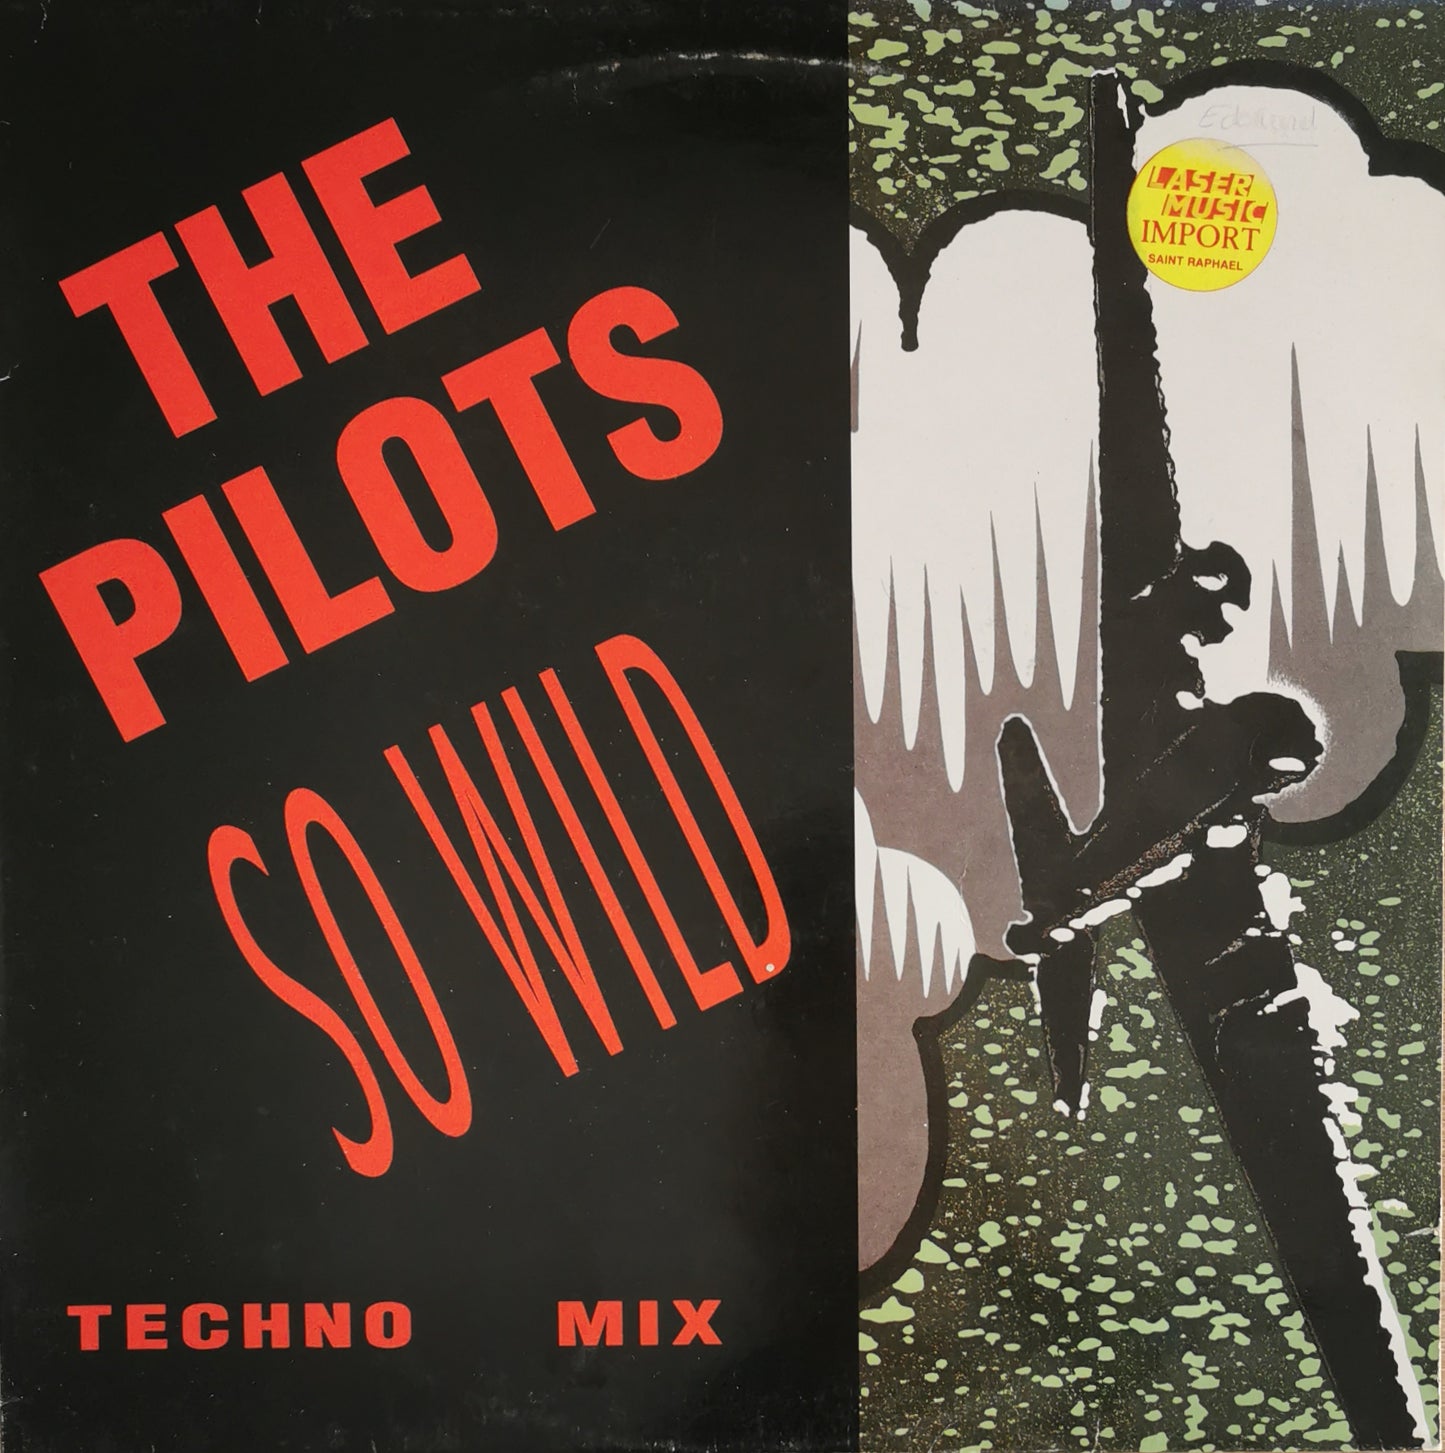 THE PILOTS - So Wild (Techno Mix)